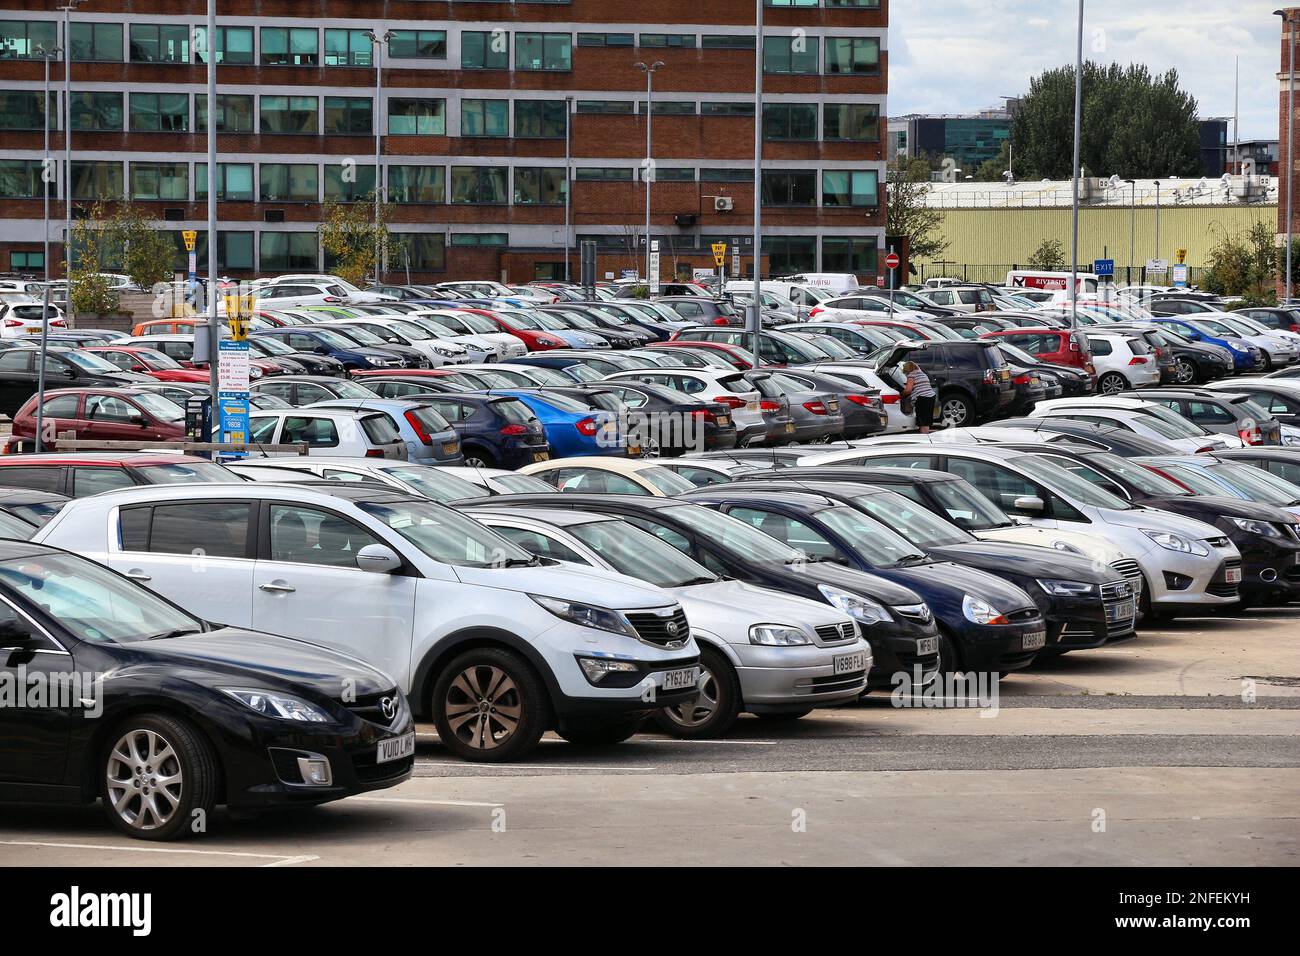 LEEDS, UK - JULY 12, 2016: Large parking lot with parking meters in Leeds, UK. Leeds urban area has 1.78 million population. Stock Photo